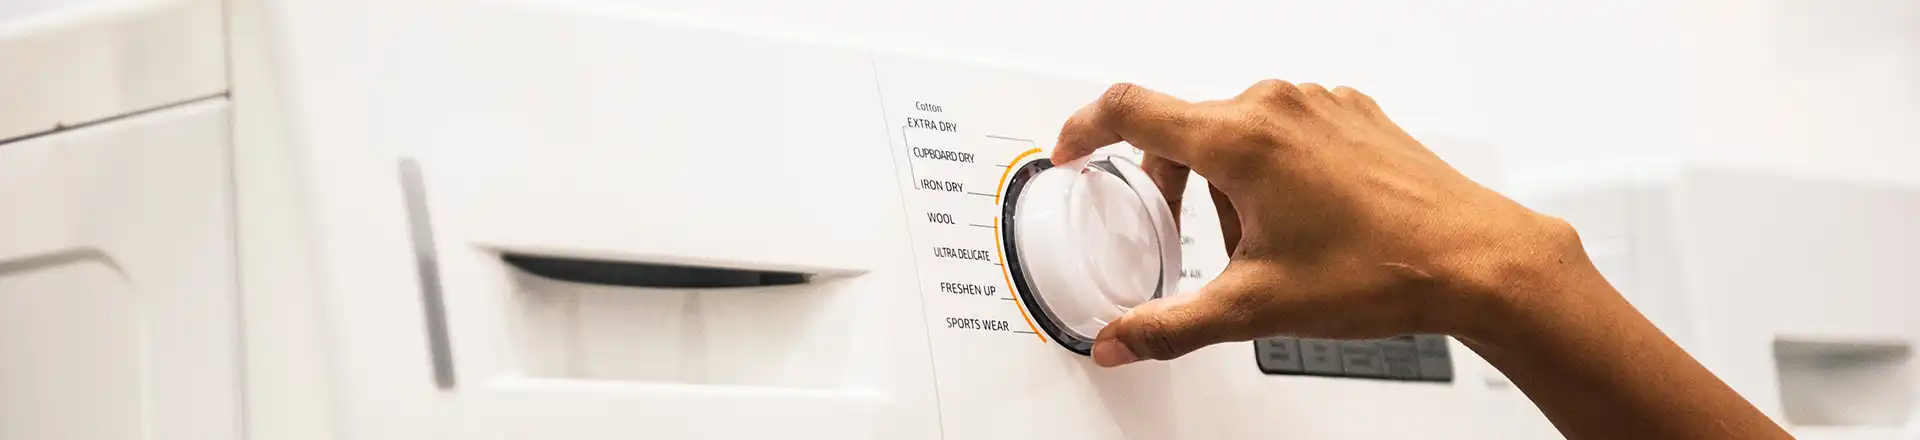 hand turning dial on washing machine